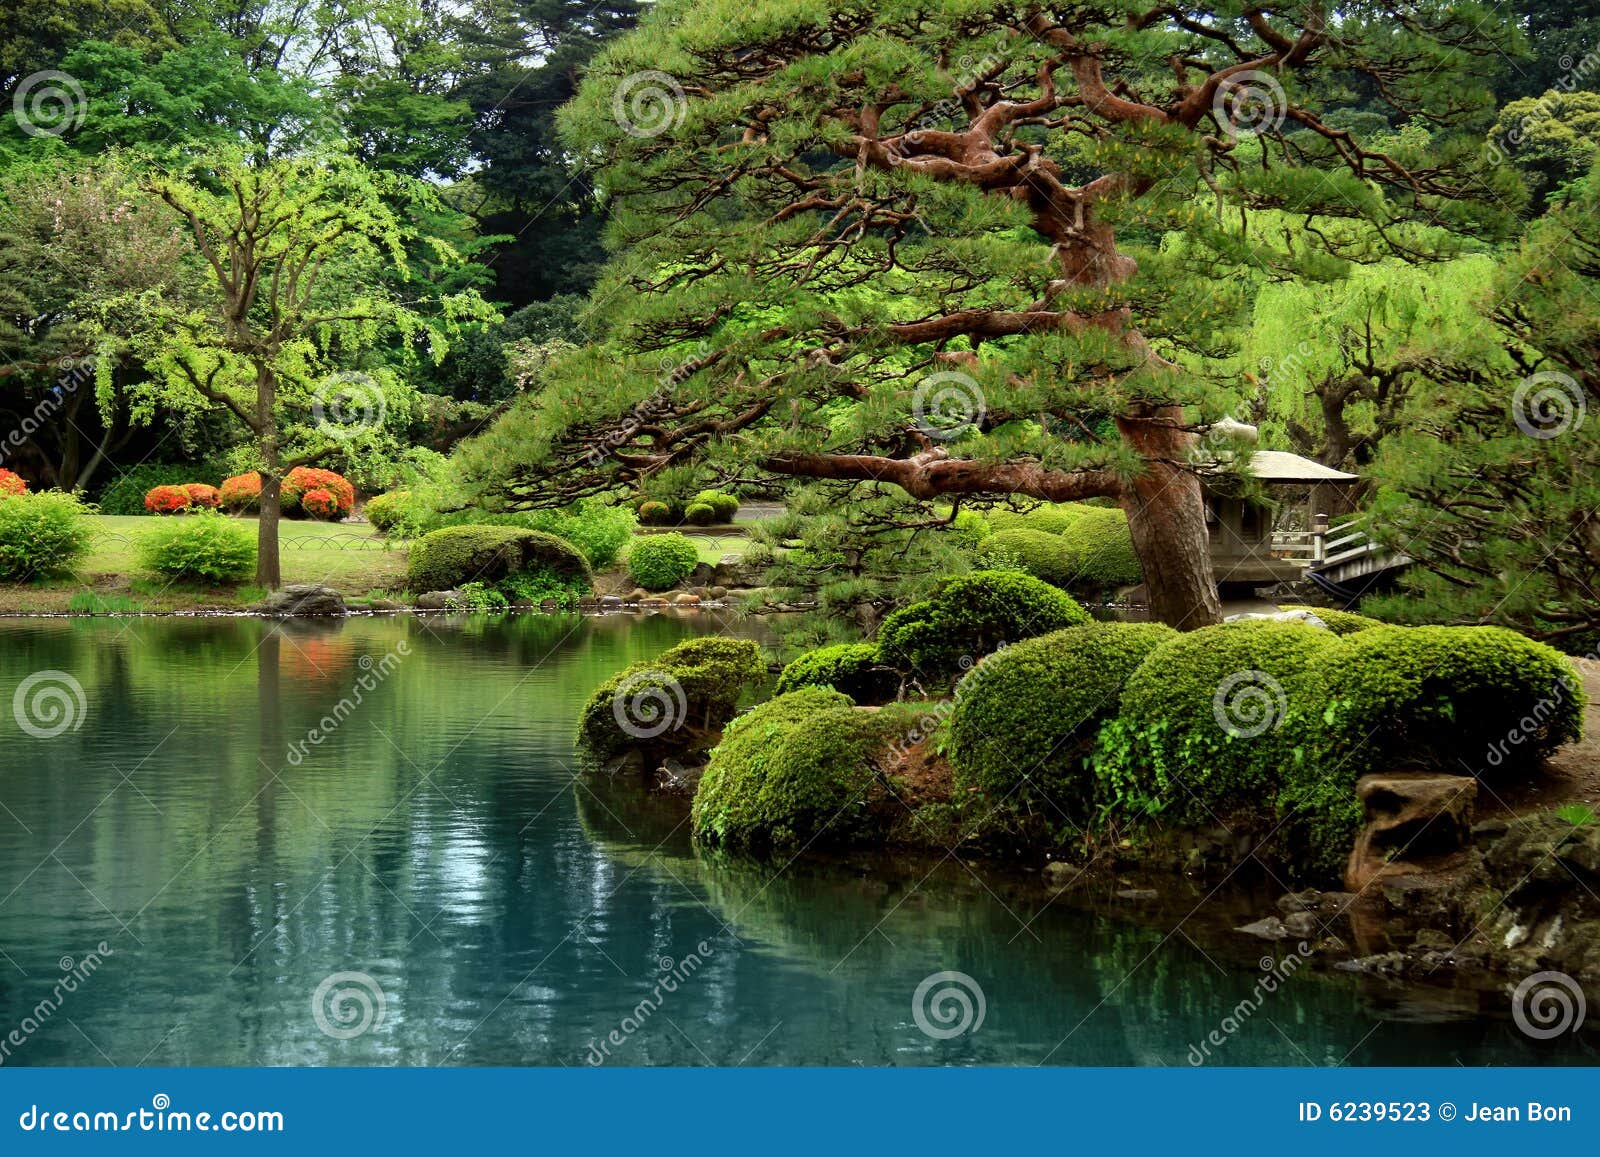 calm zen lake and bonzai trees